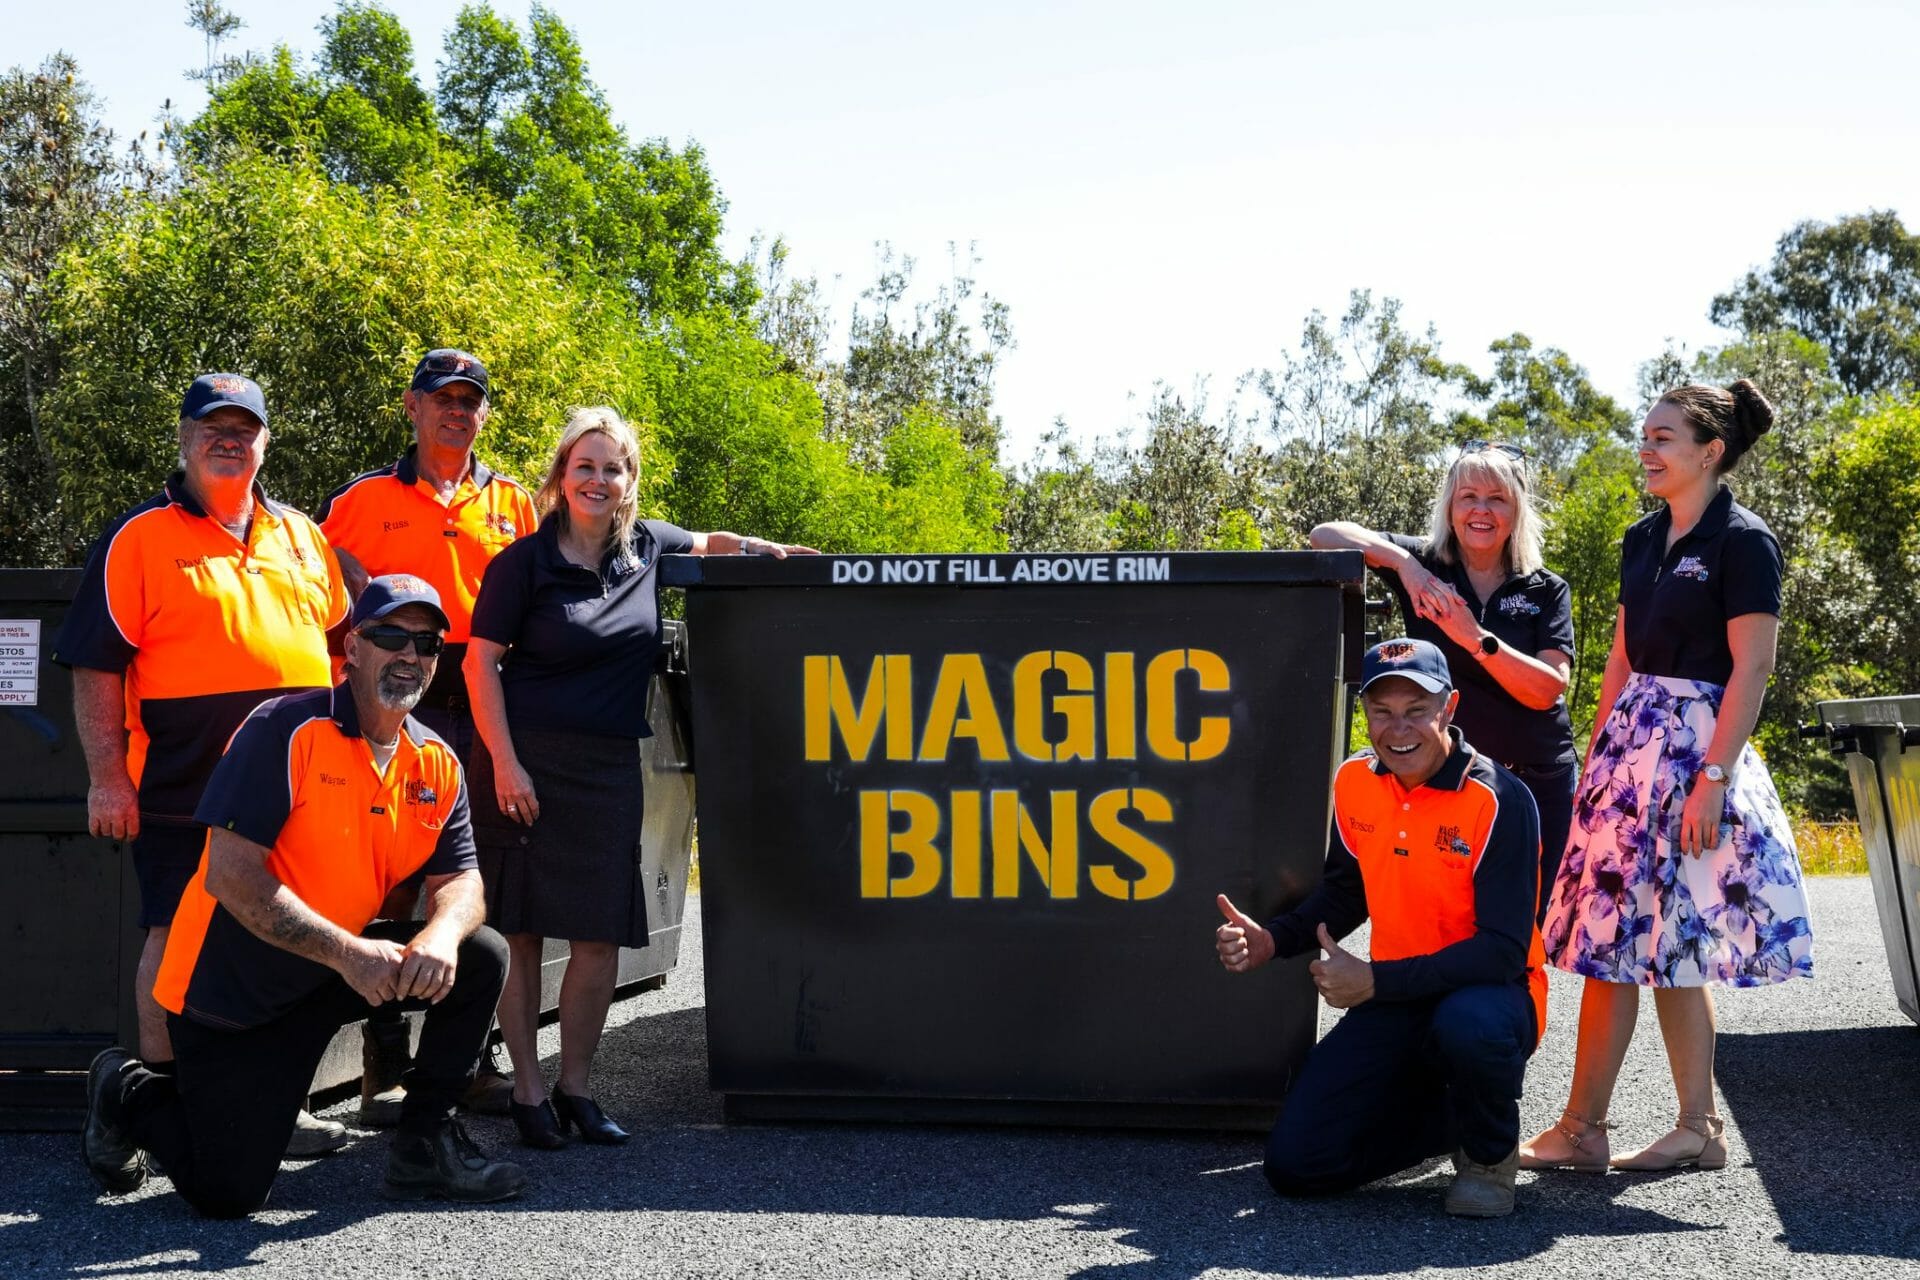 Magic bins team next to skip bin